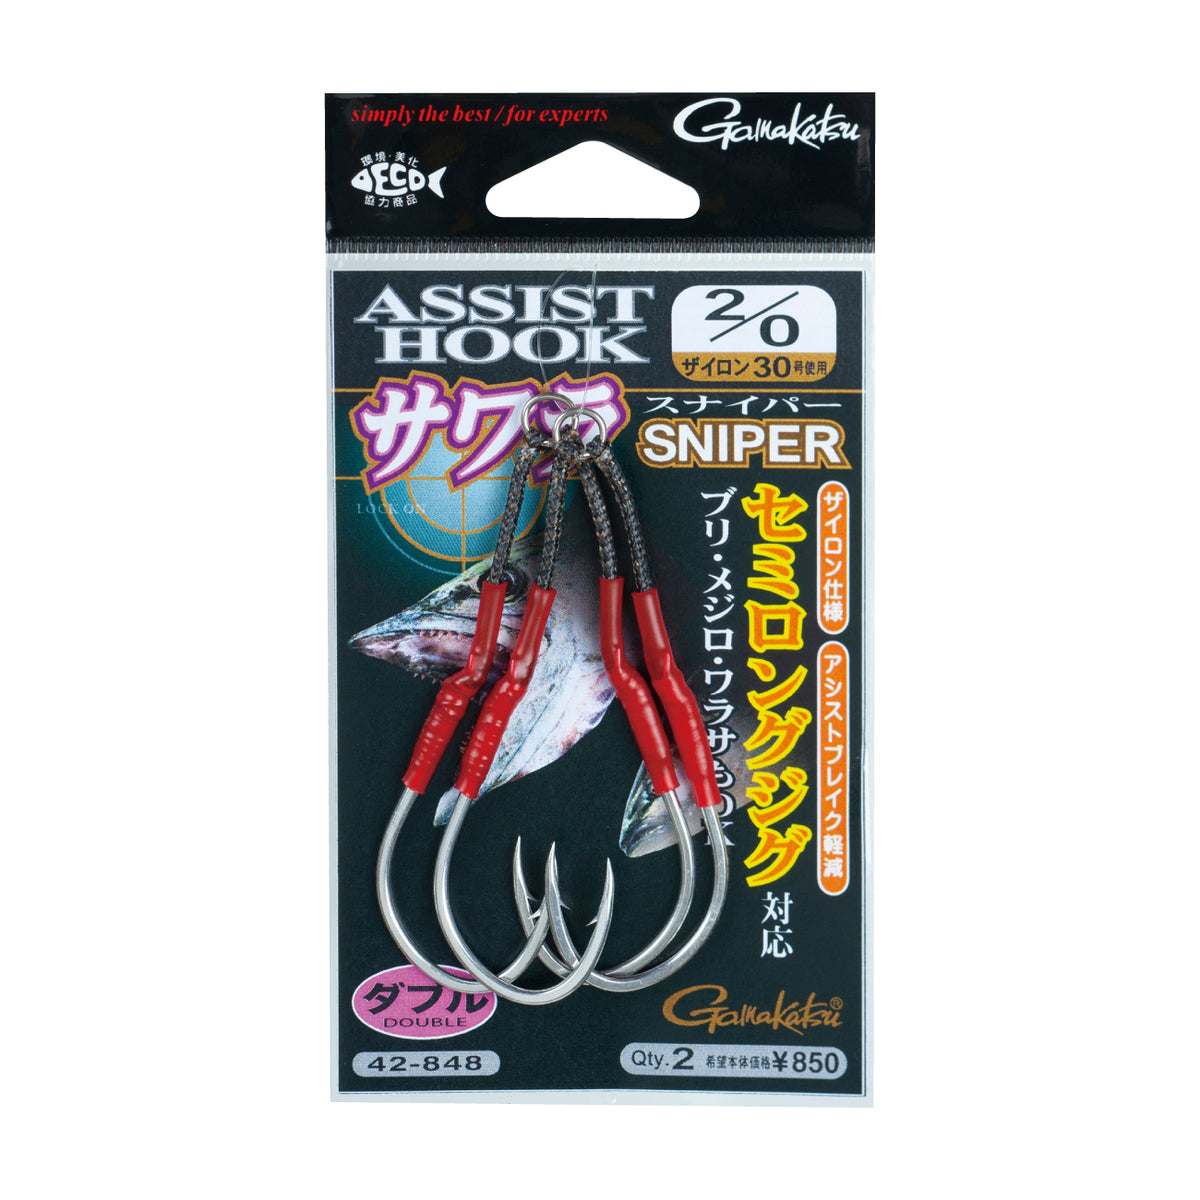 Gamakatsu Double Assist Hooks Sawara Sniper 42-848